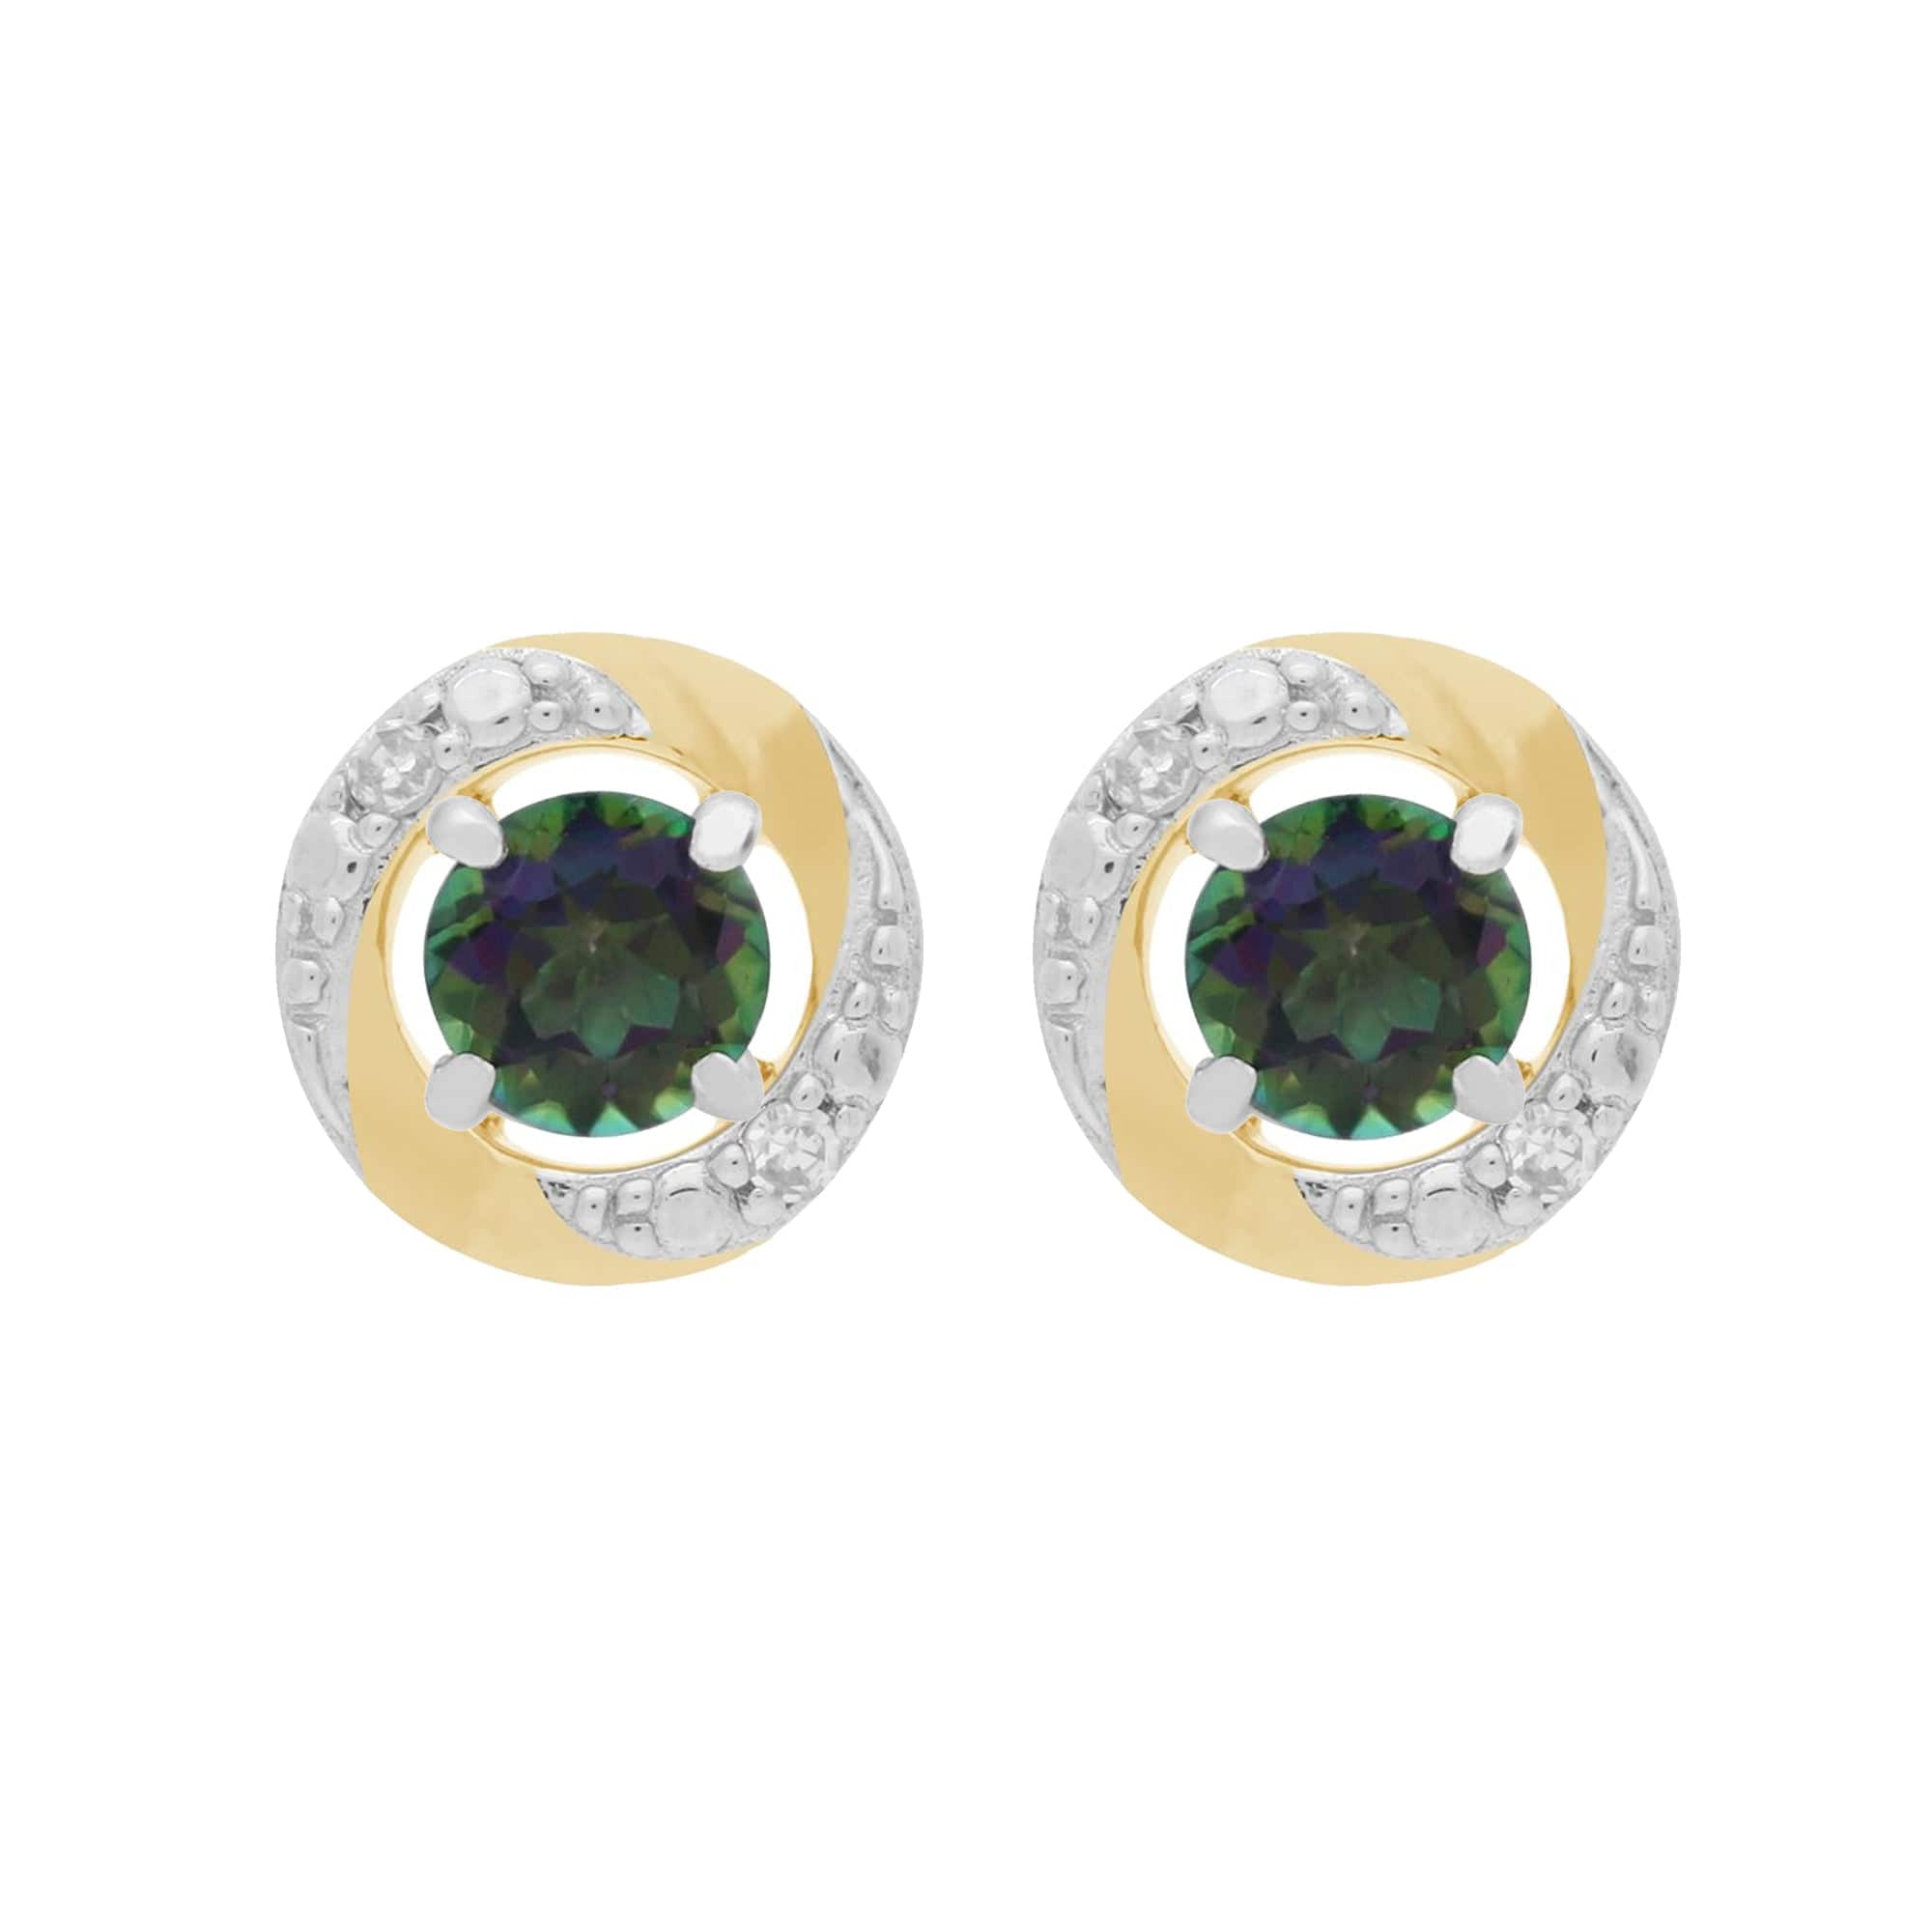 9ct White Gold Mystic Topaz Stud Earrings & Diamond Halo Ear Jacket Image 1 